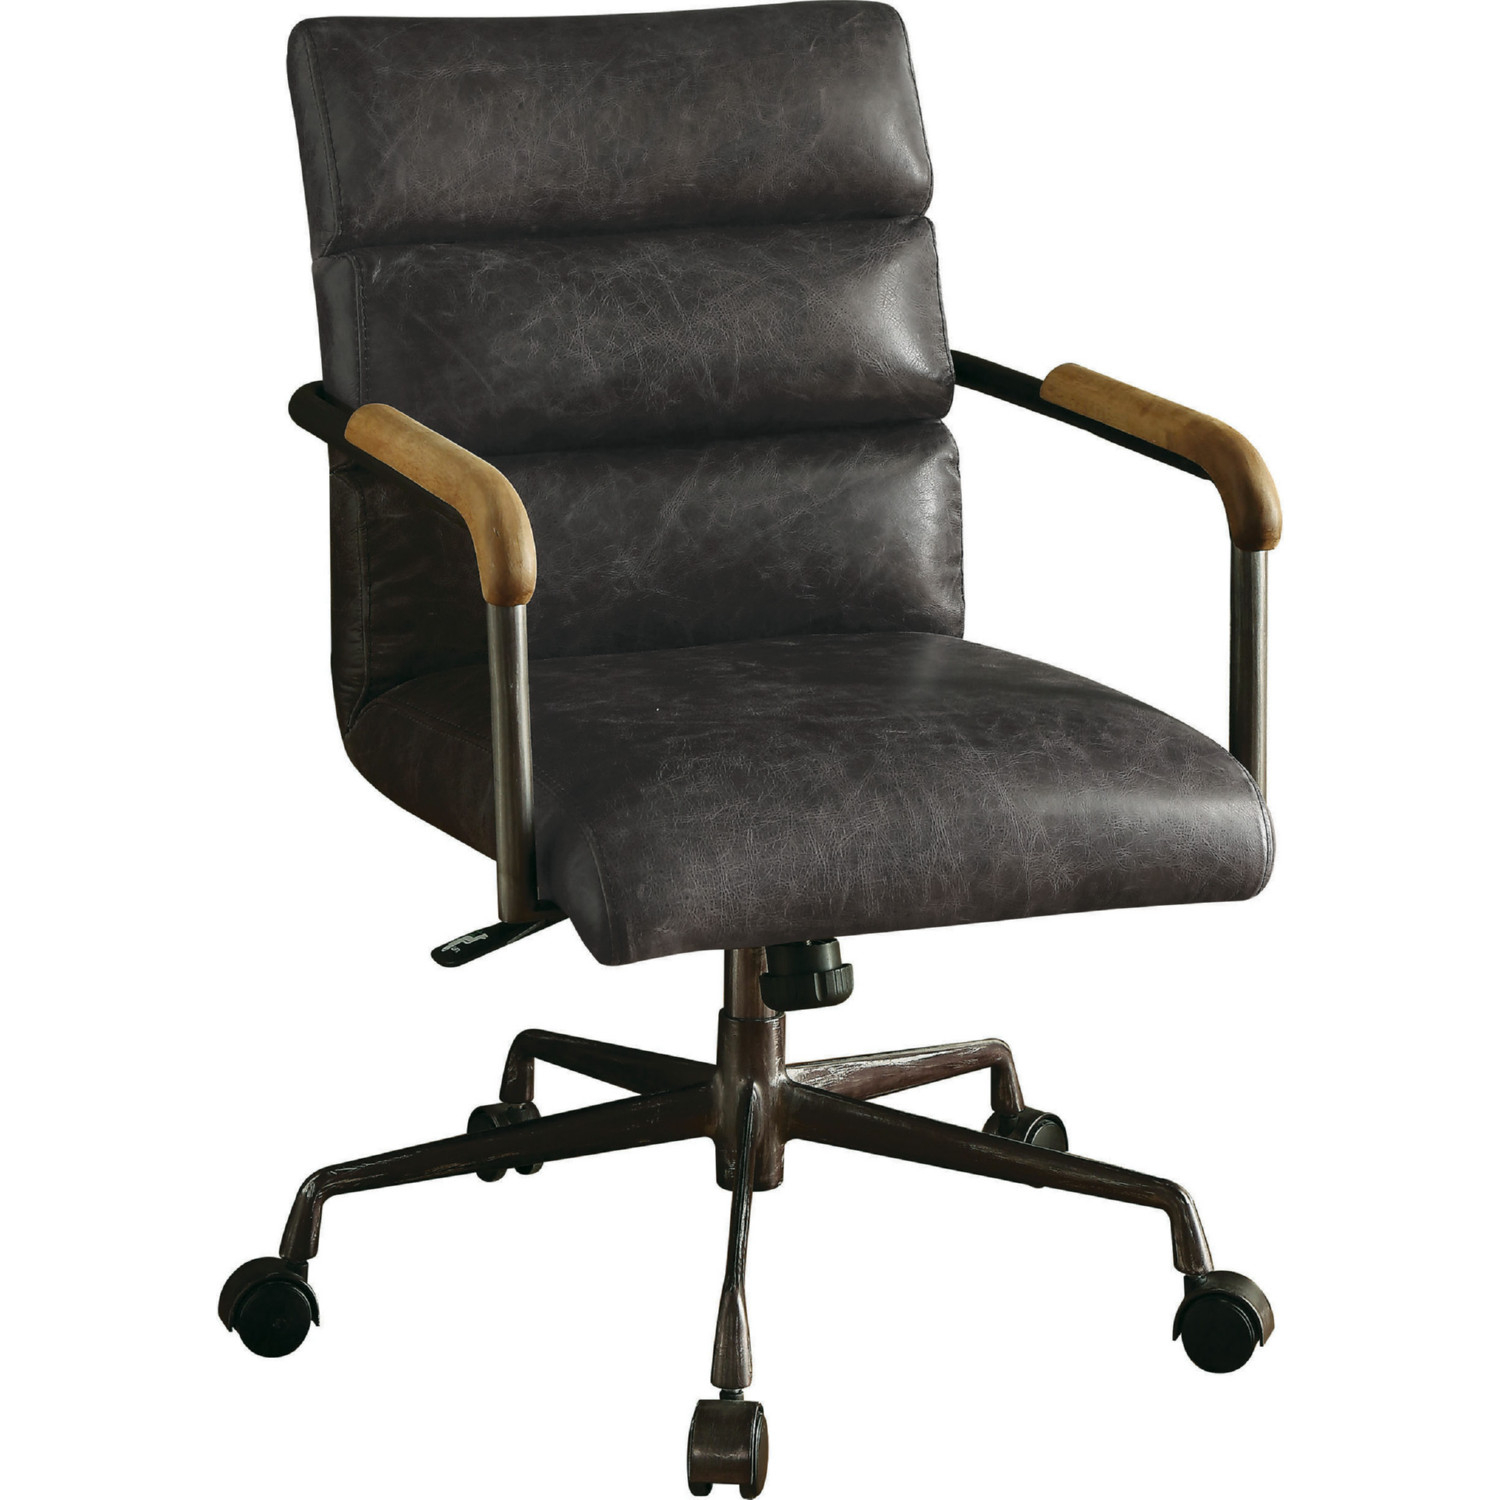 Acme 92415 Harith Executive Office, Top Grain Leather Executive Desk Chair